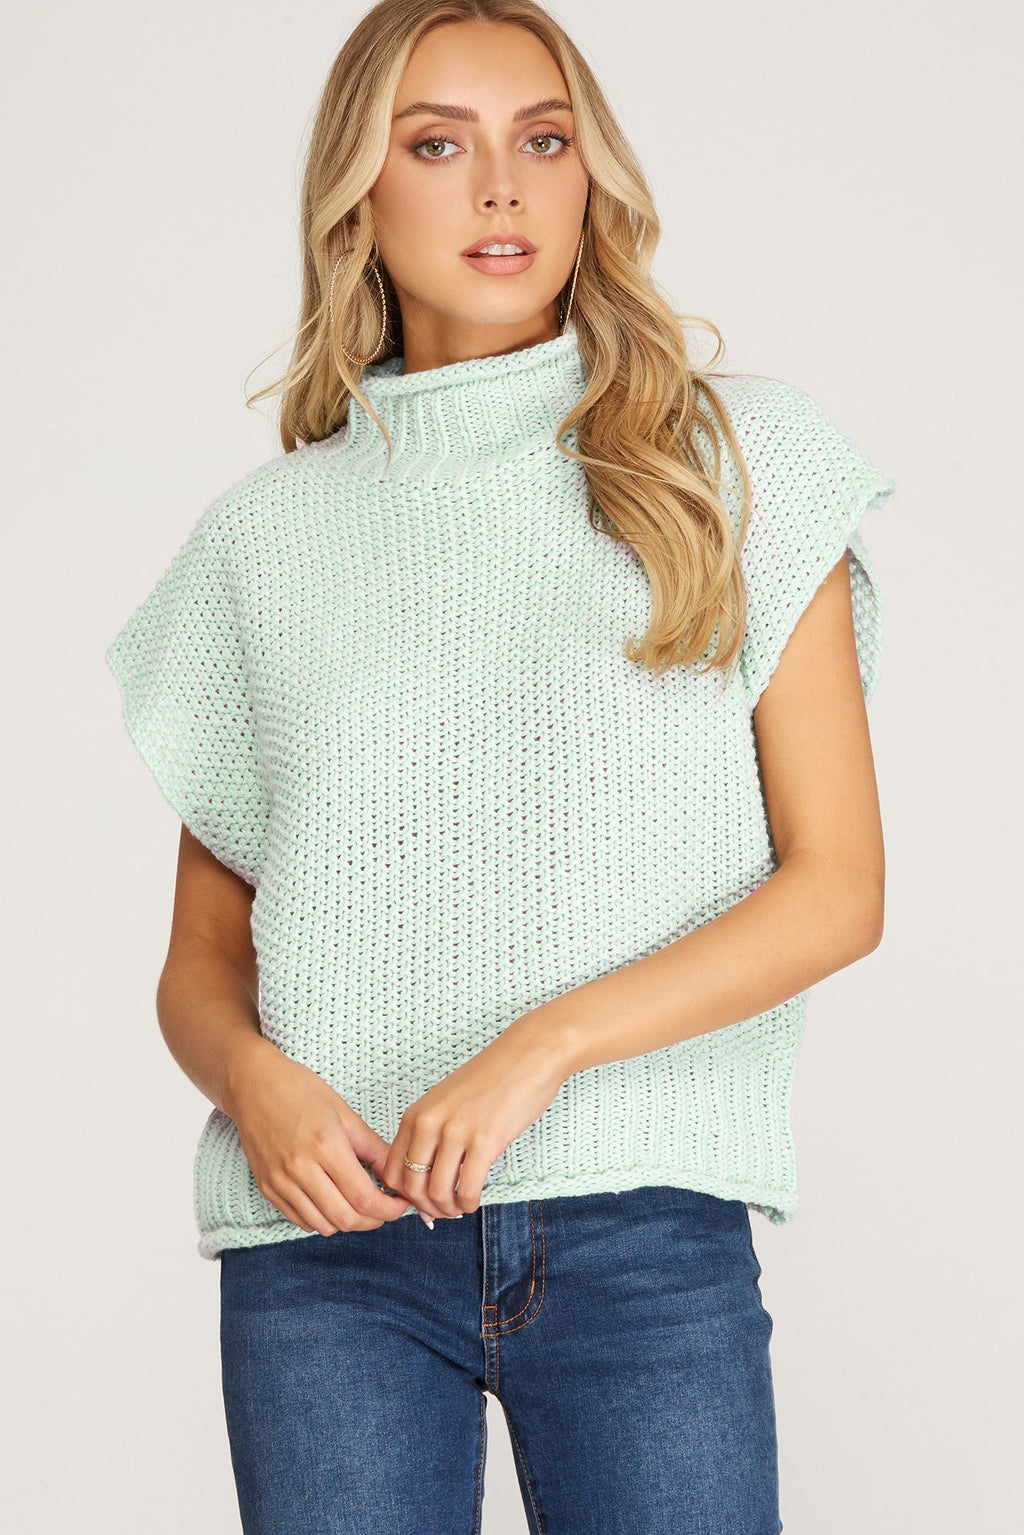 Mint Drop Shoulder sleeveless mock neck knit sweater top